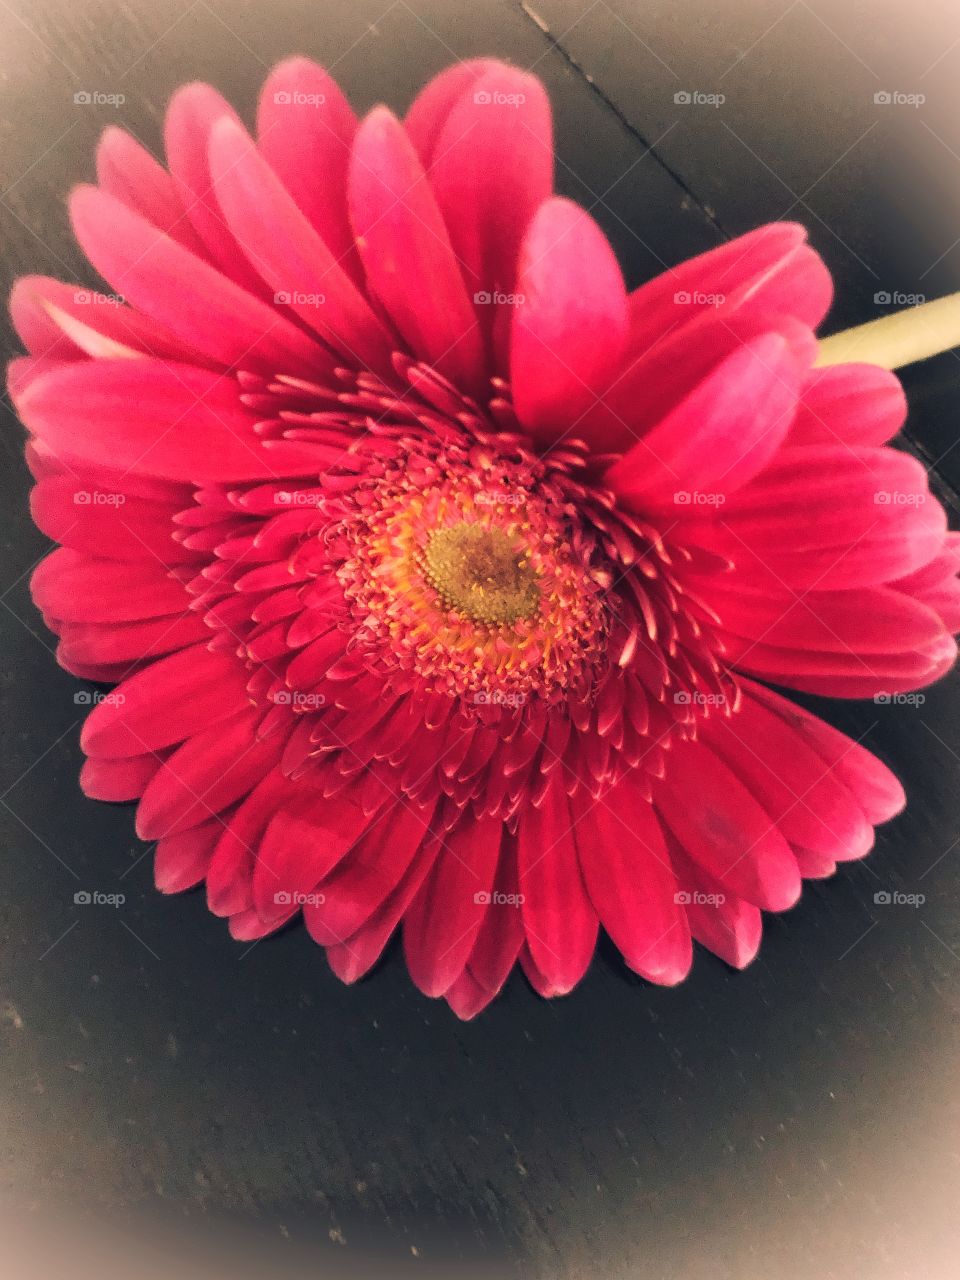 Flower closeup bright pink Gerbera daisy 